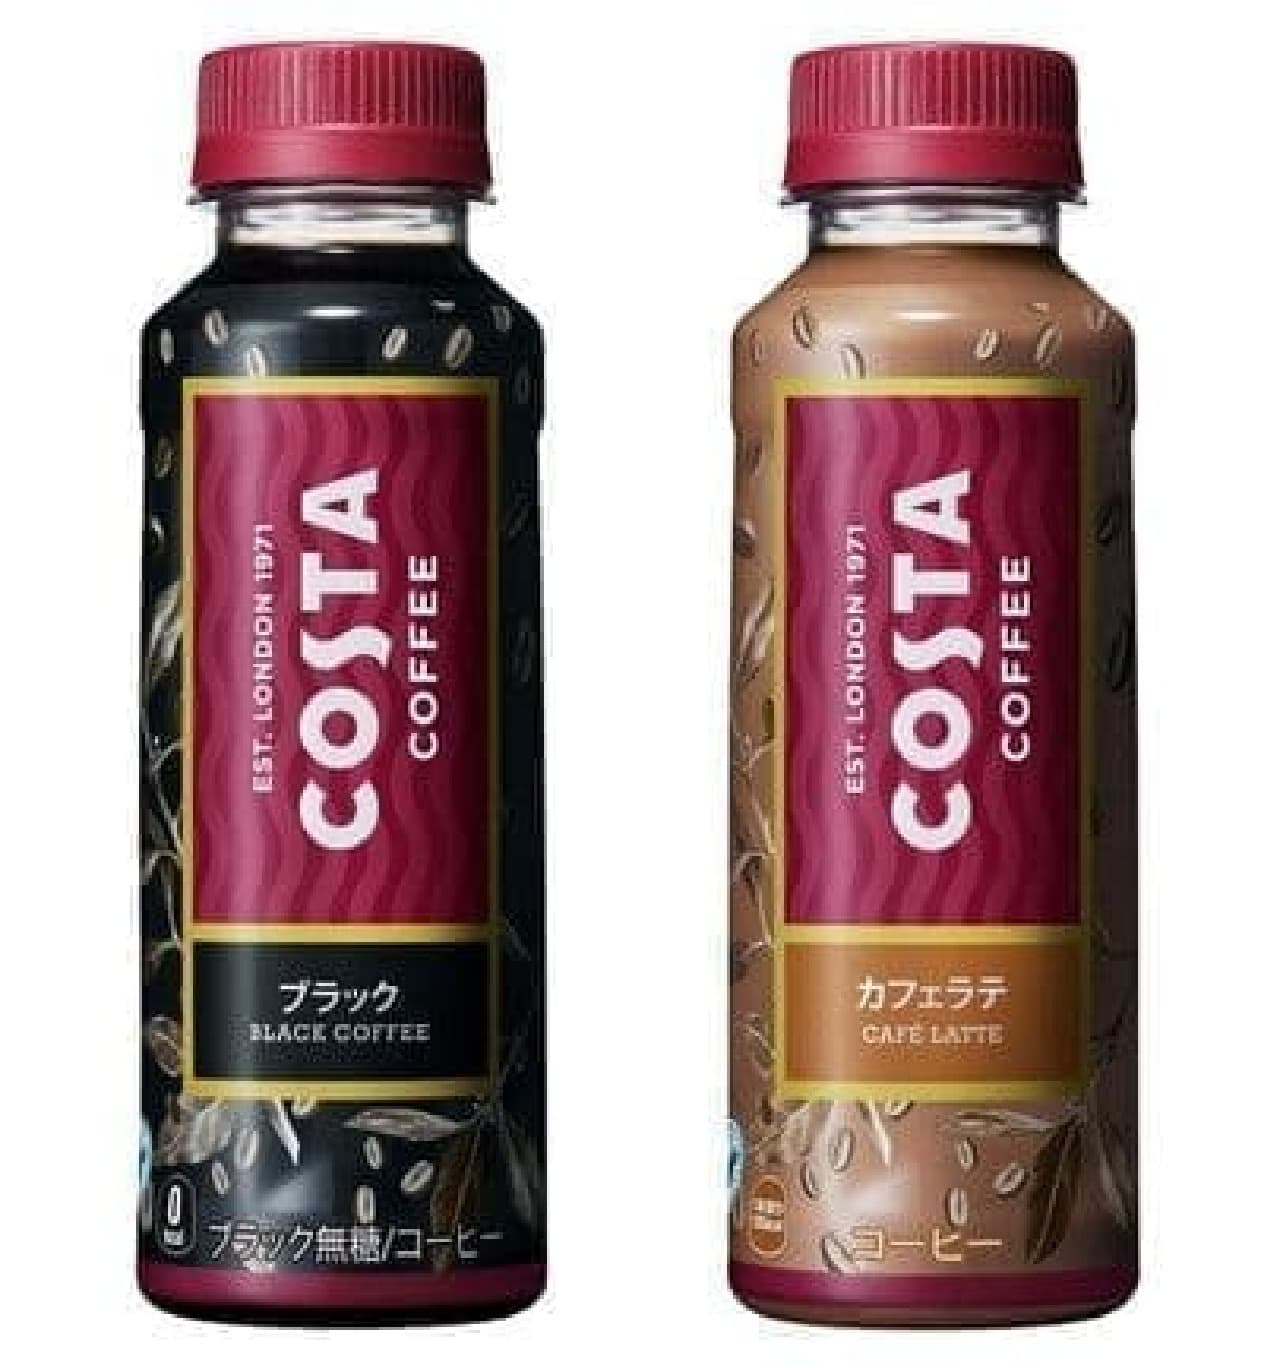 "Costa Black" "Costa Cafe Latte"